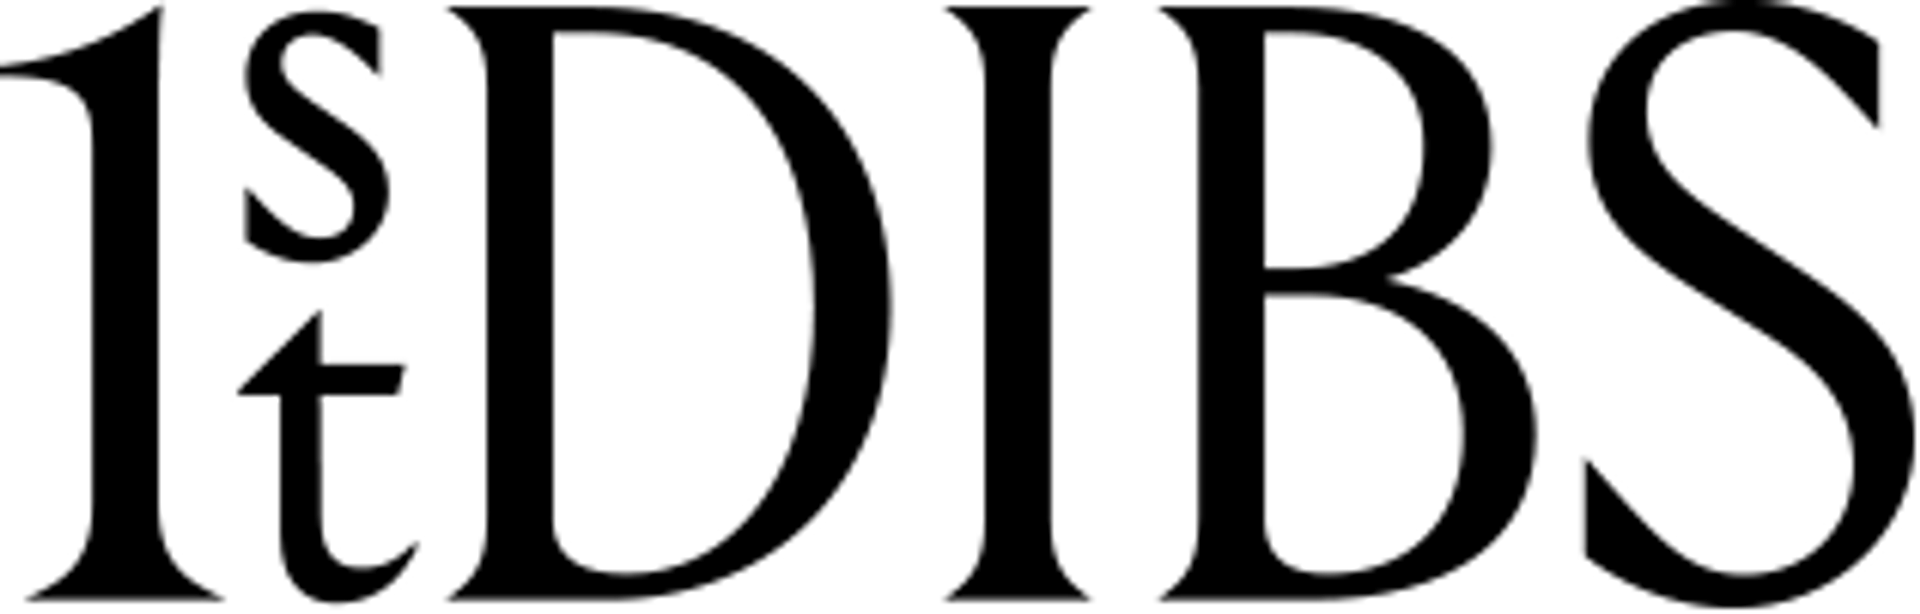 1STDIBS logo. Current weekly ad